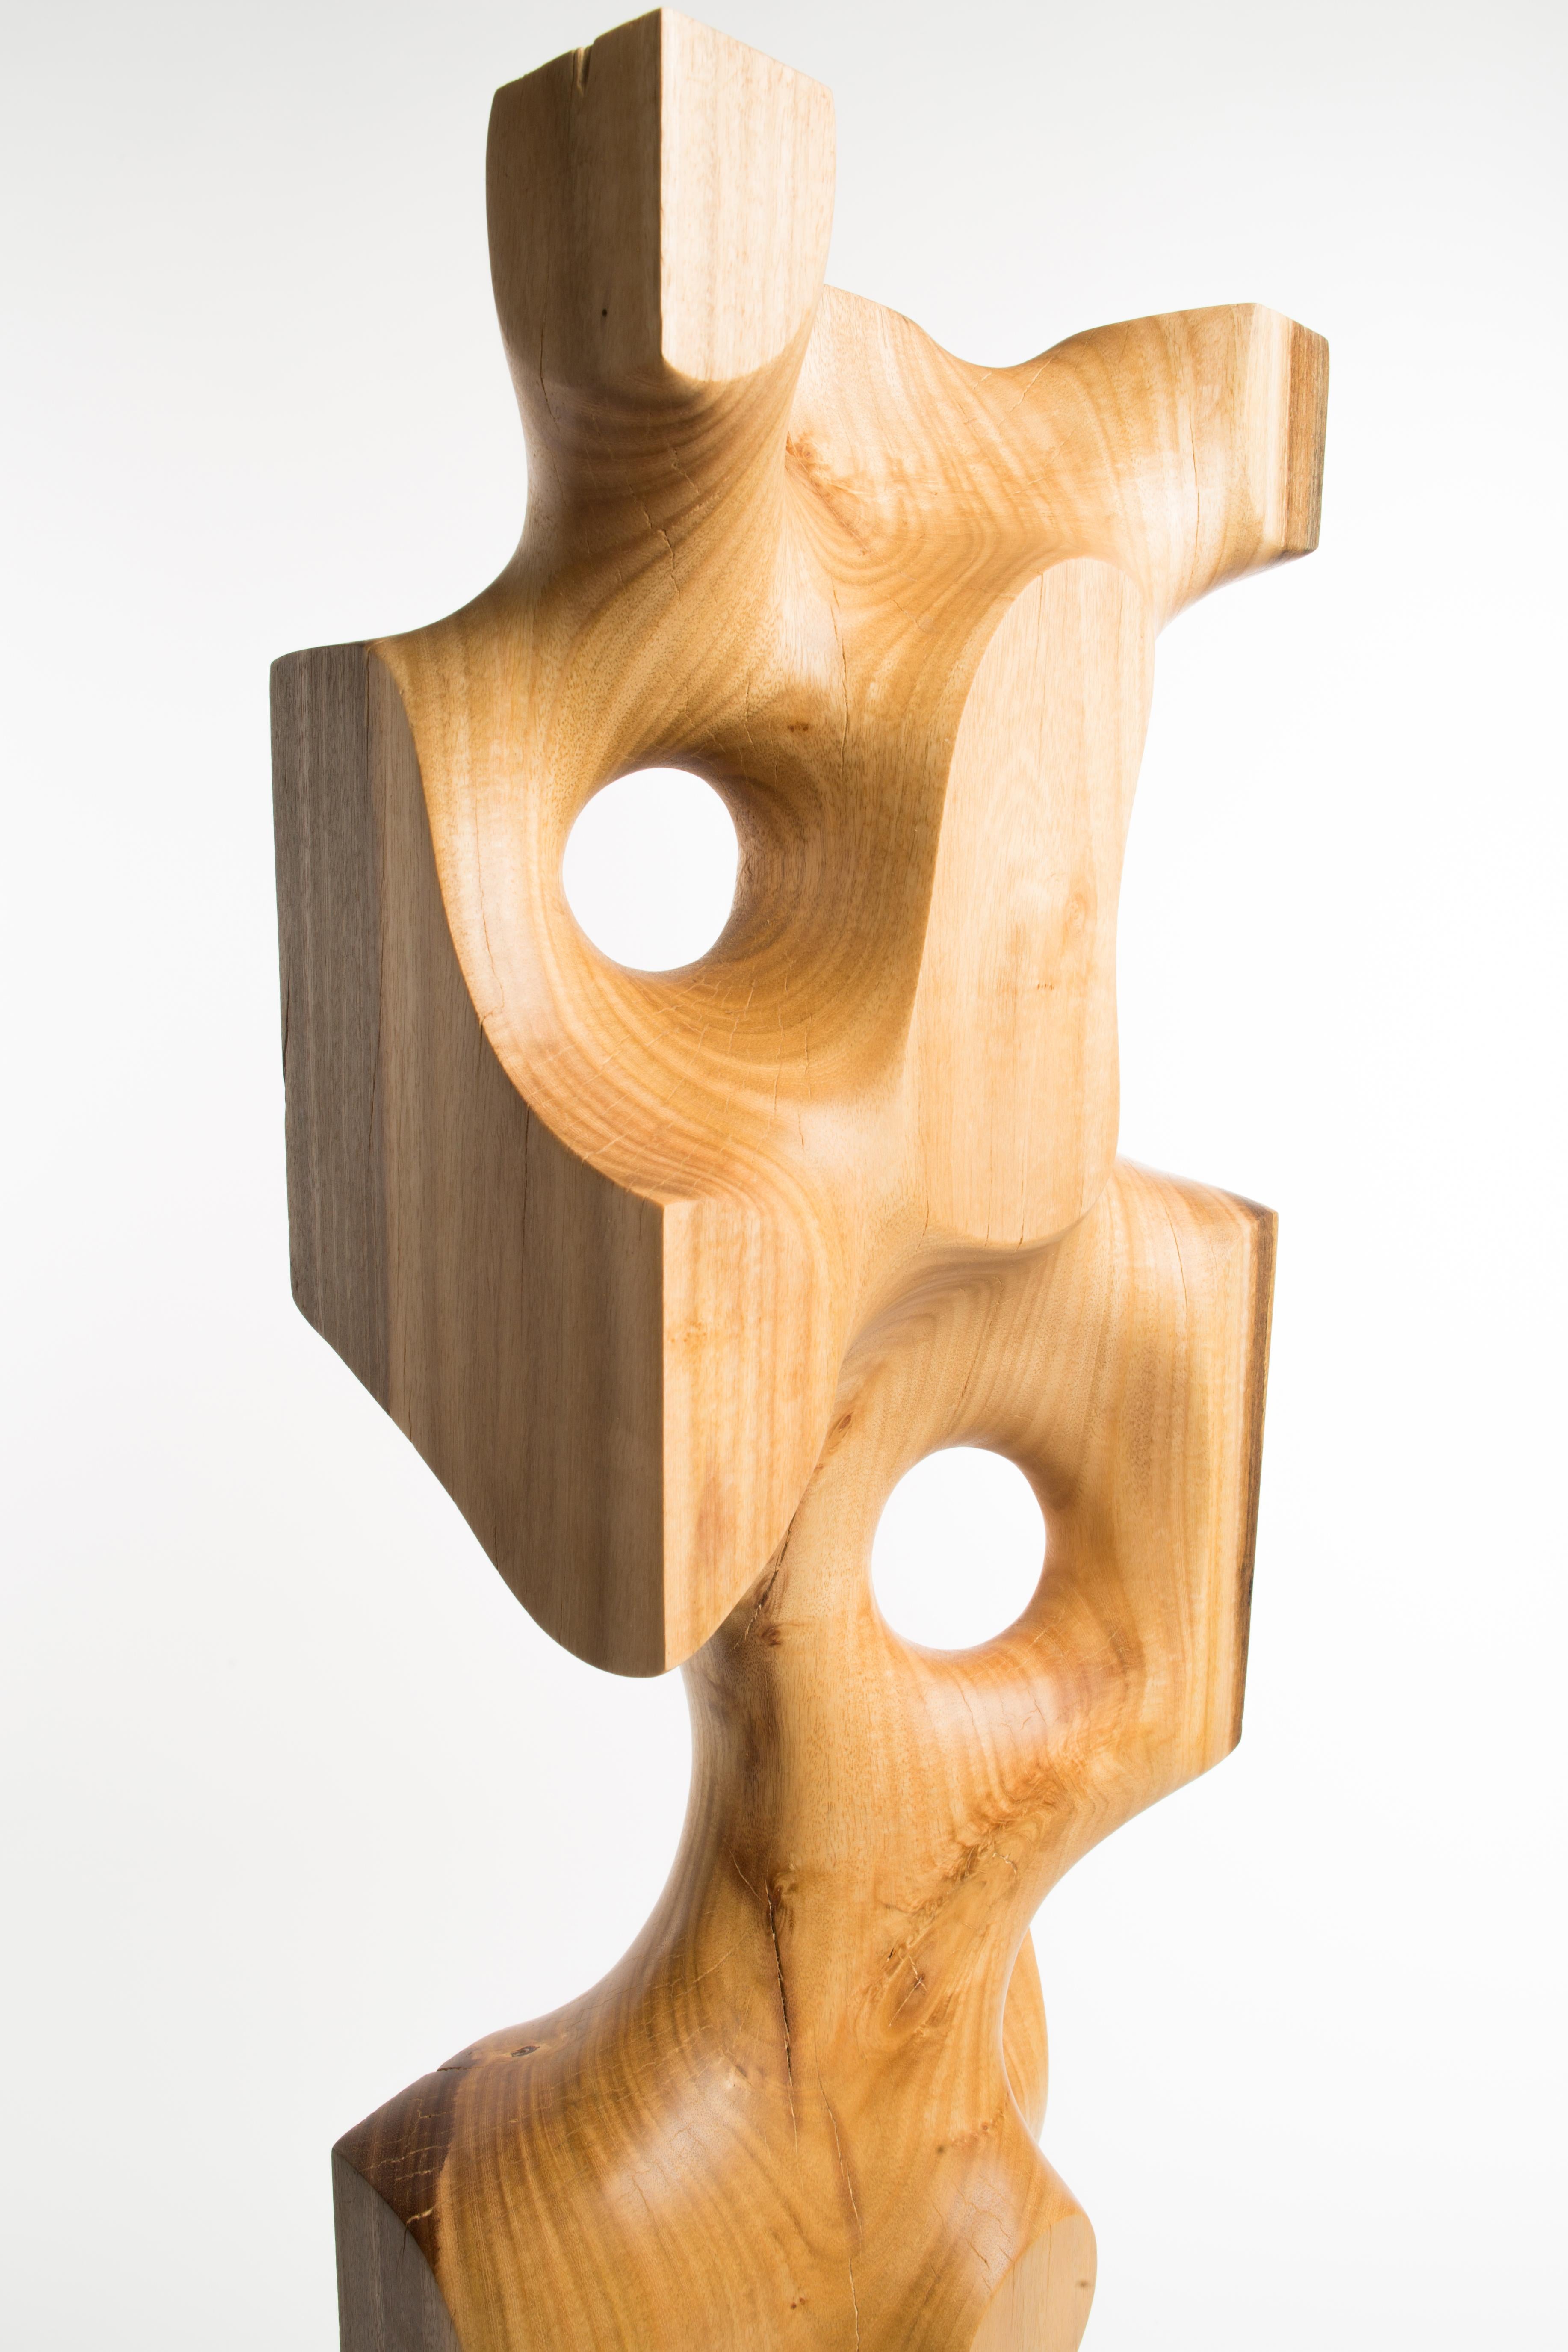 Driaan Claassen for Reticence, Abstract Geometric Sculpture, Wooden Cuboid 009 6